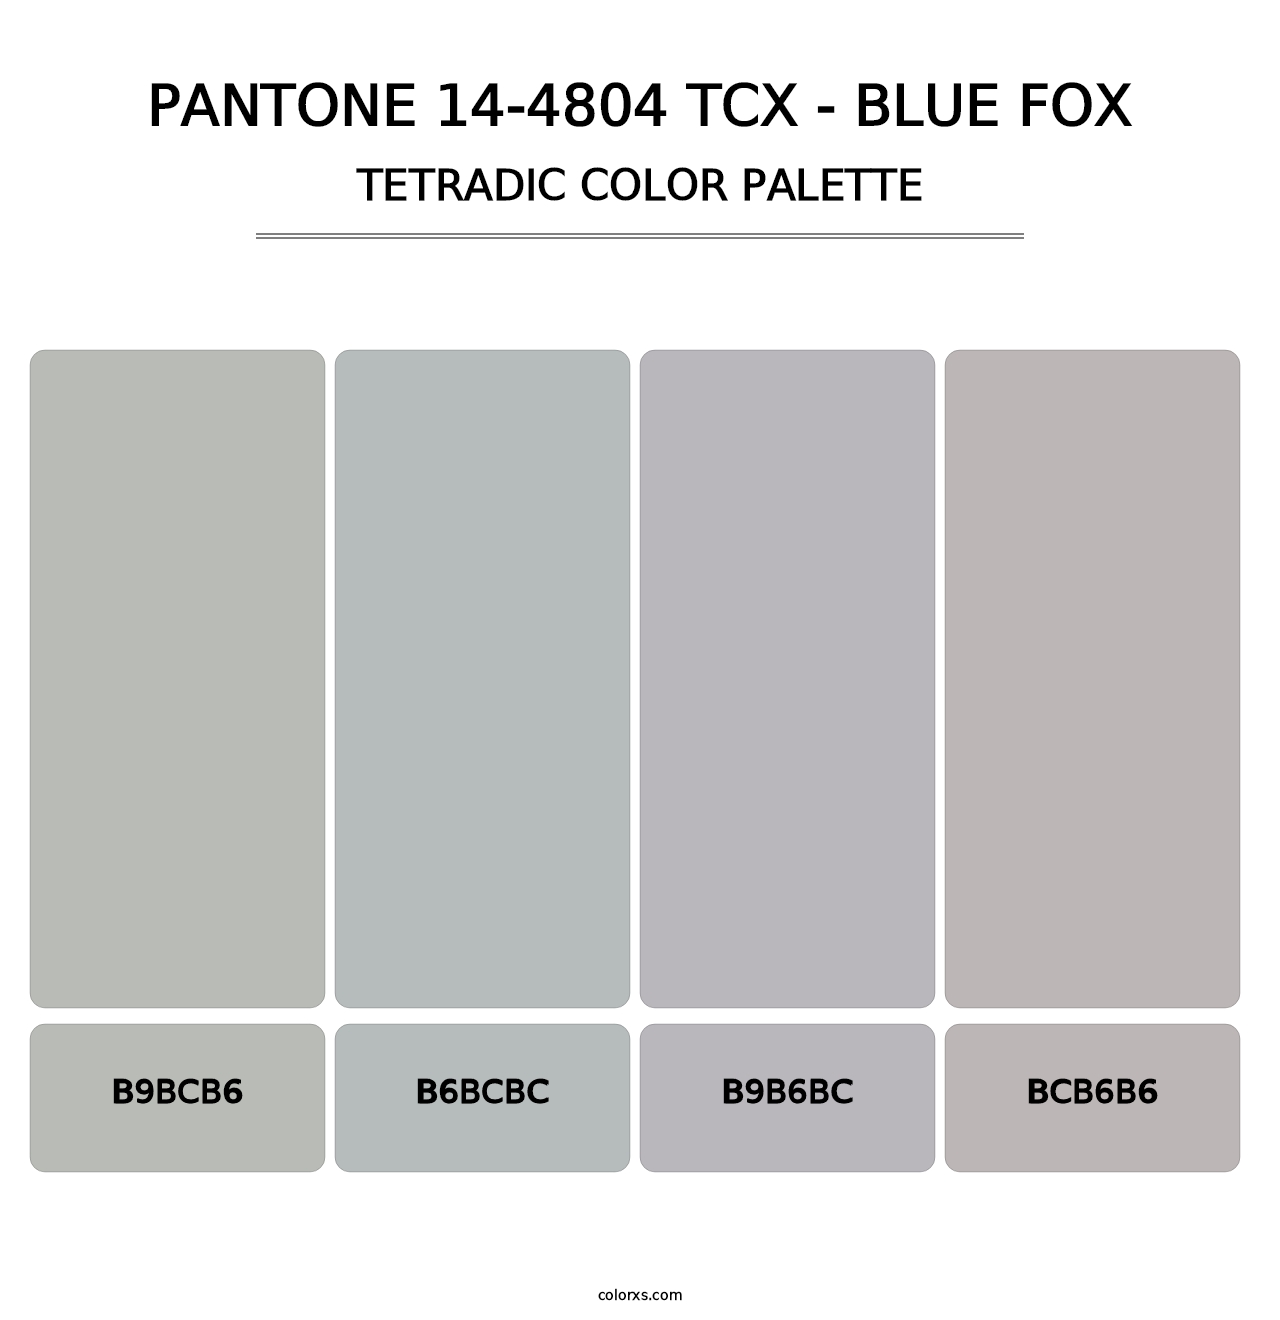 PANTONE 14-4804 TCX - Blue Fox - Tetradic Color Palette